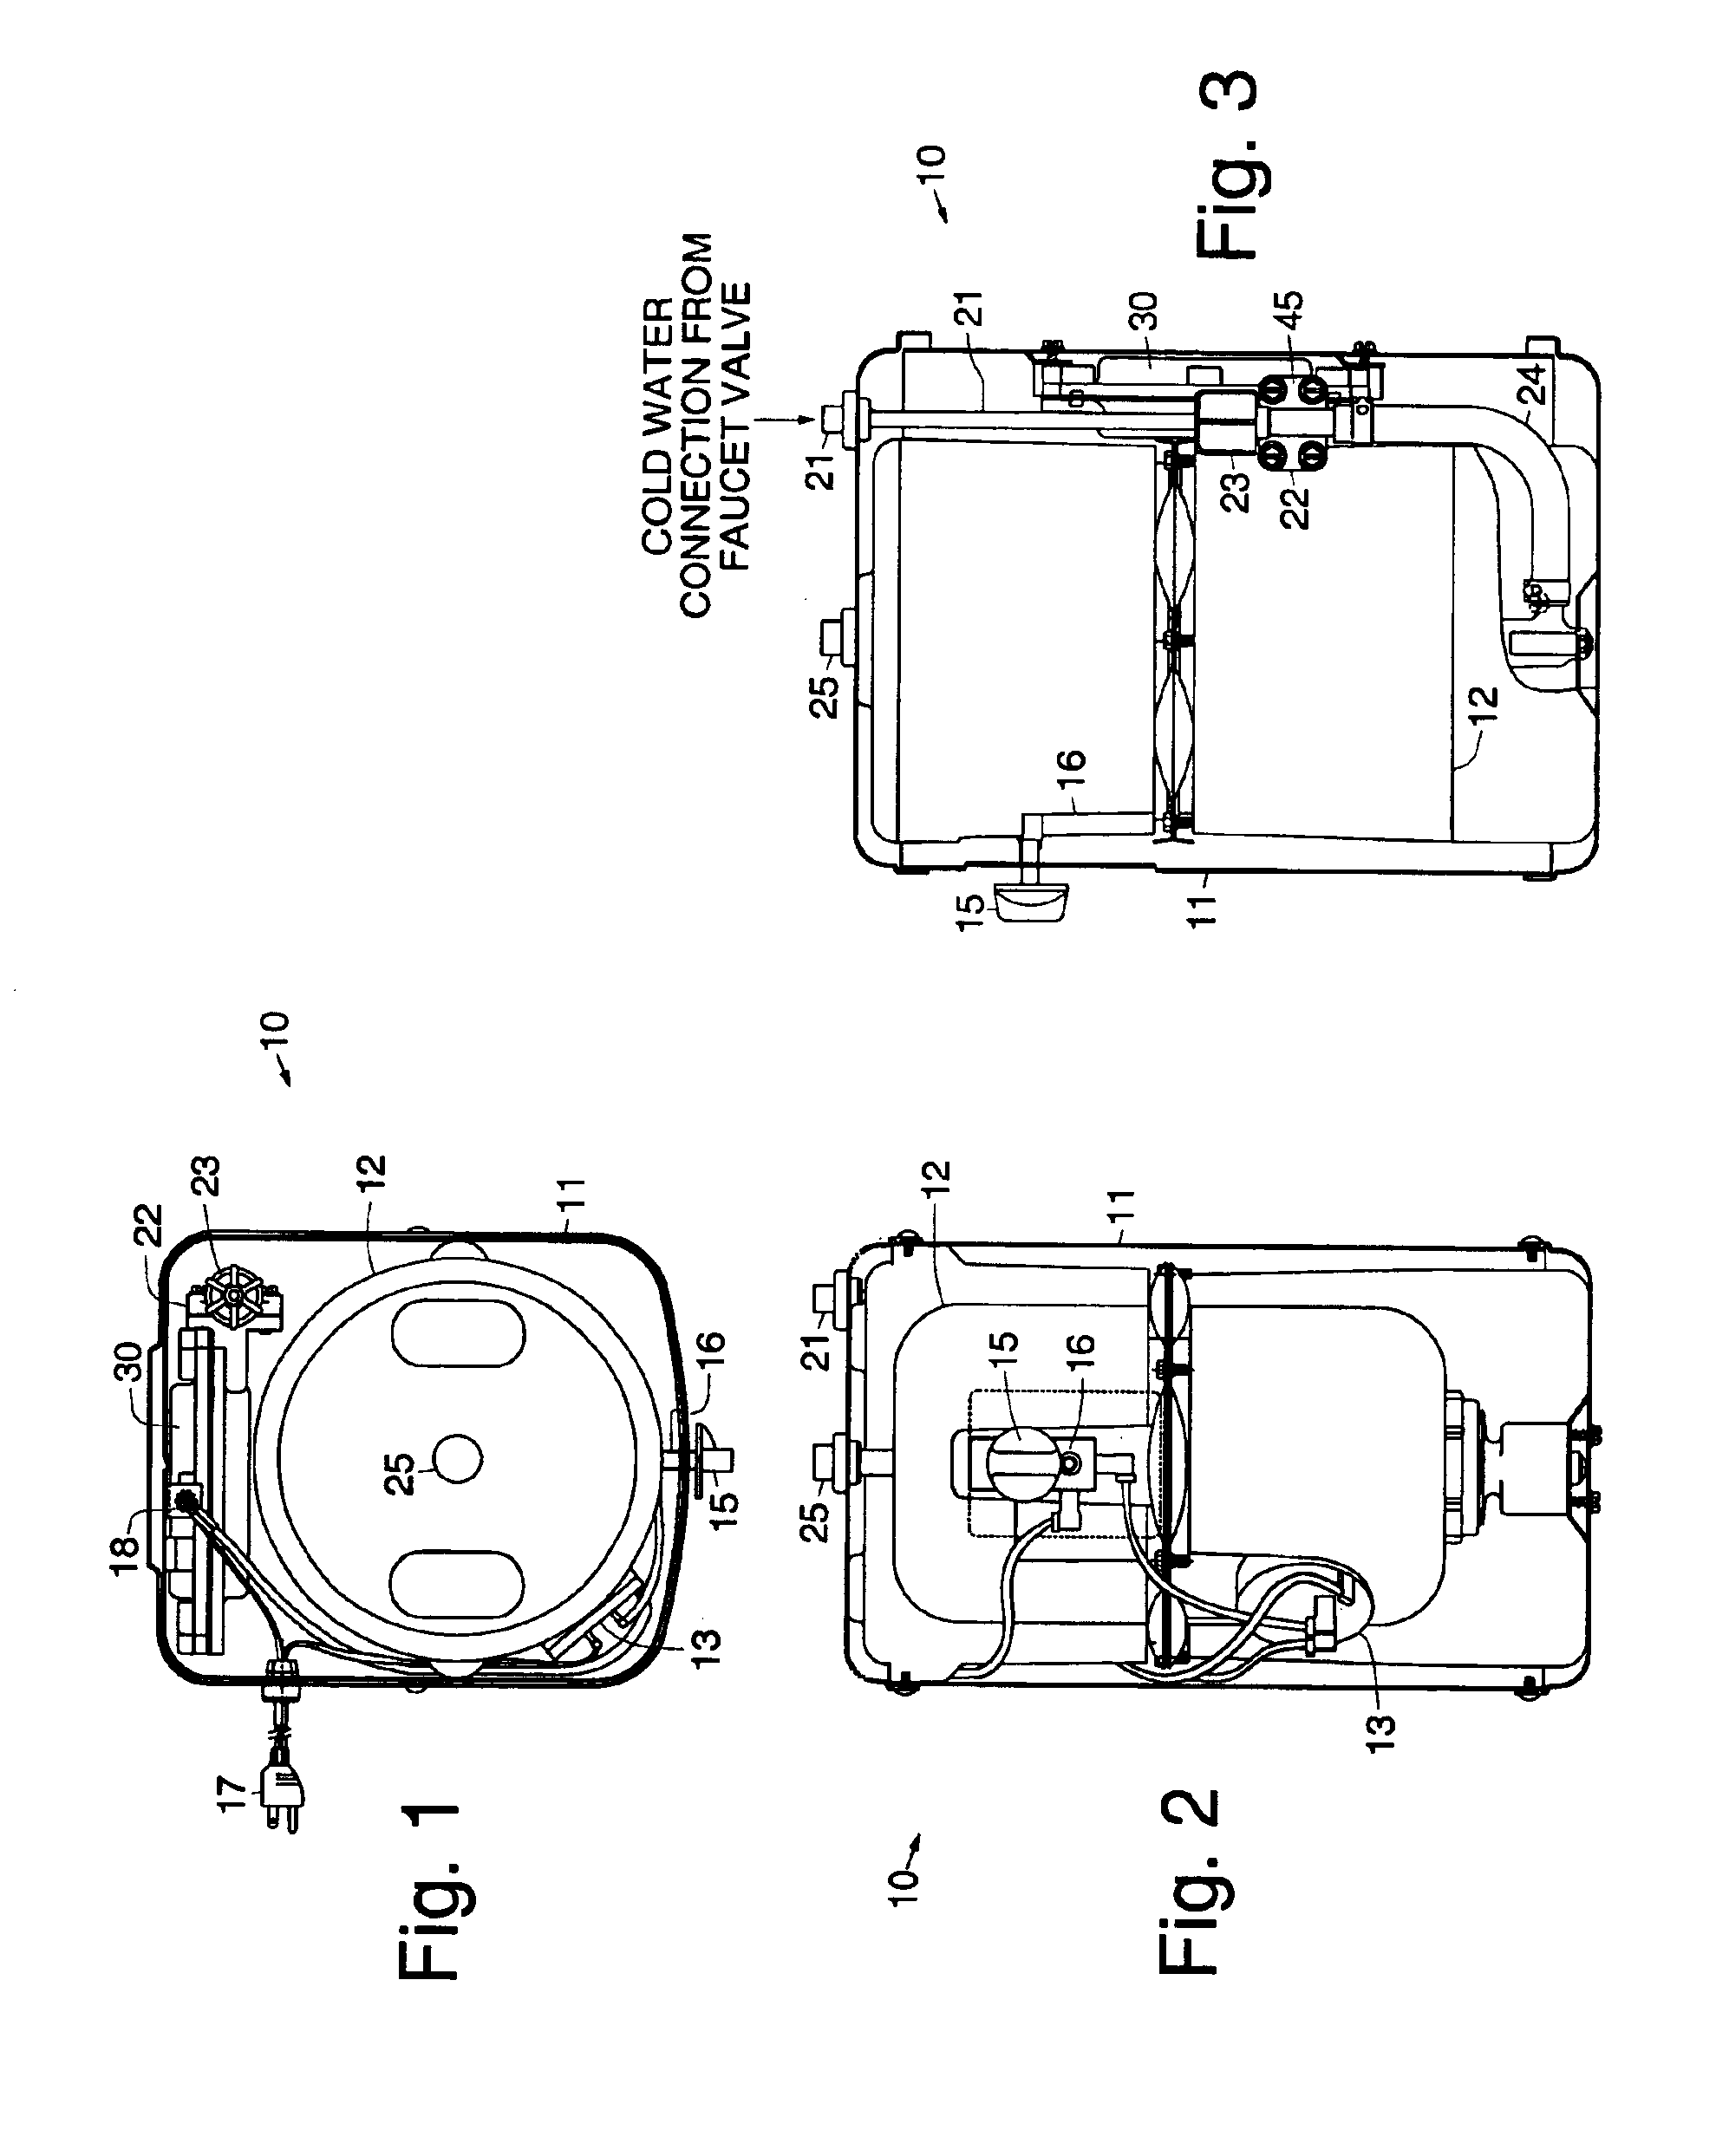 Hot water dispensing system